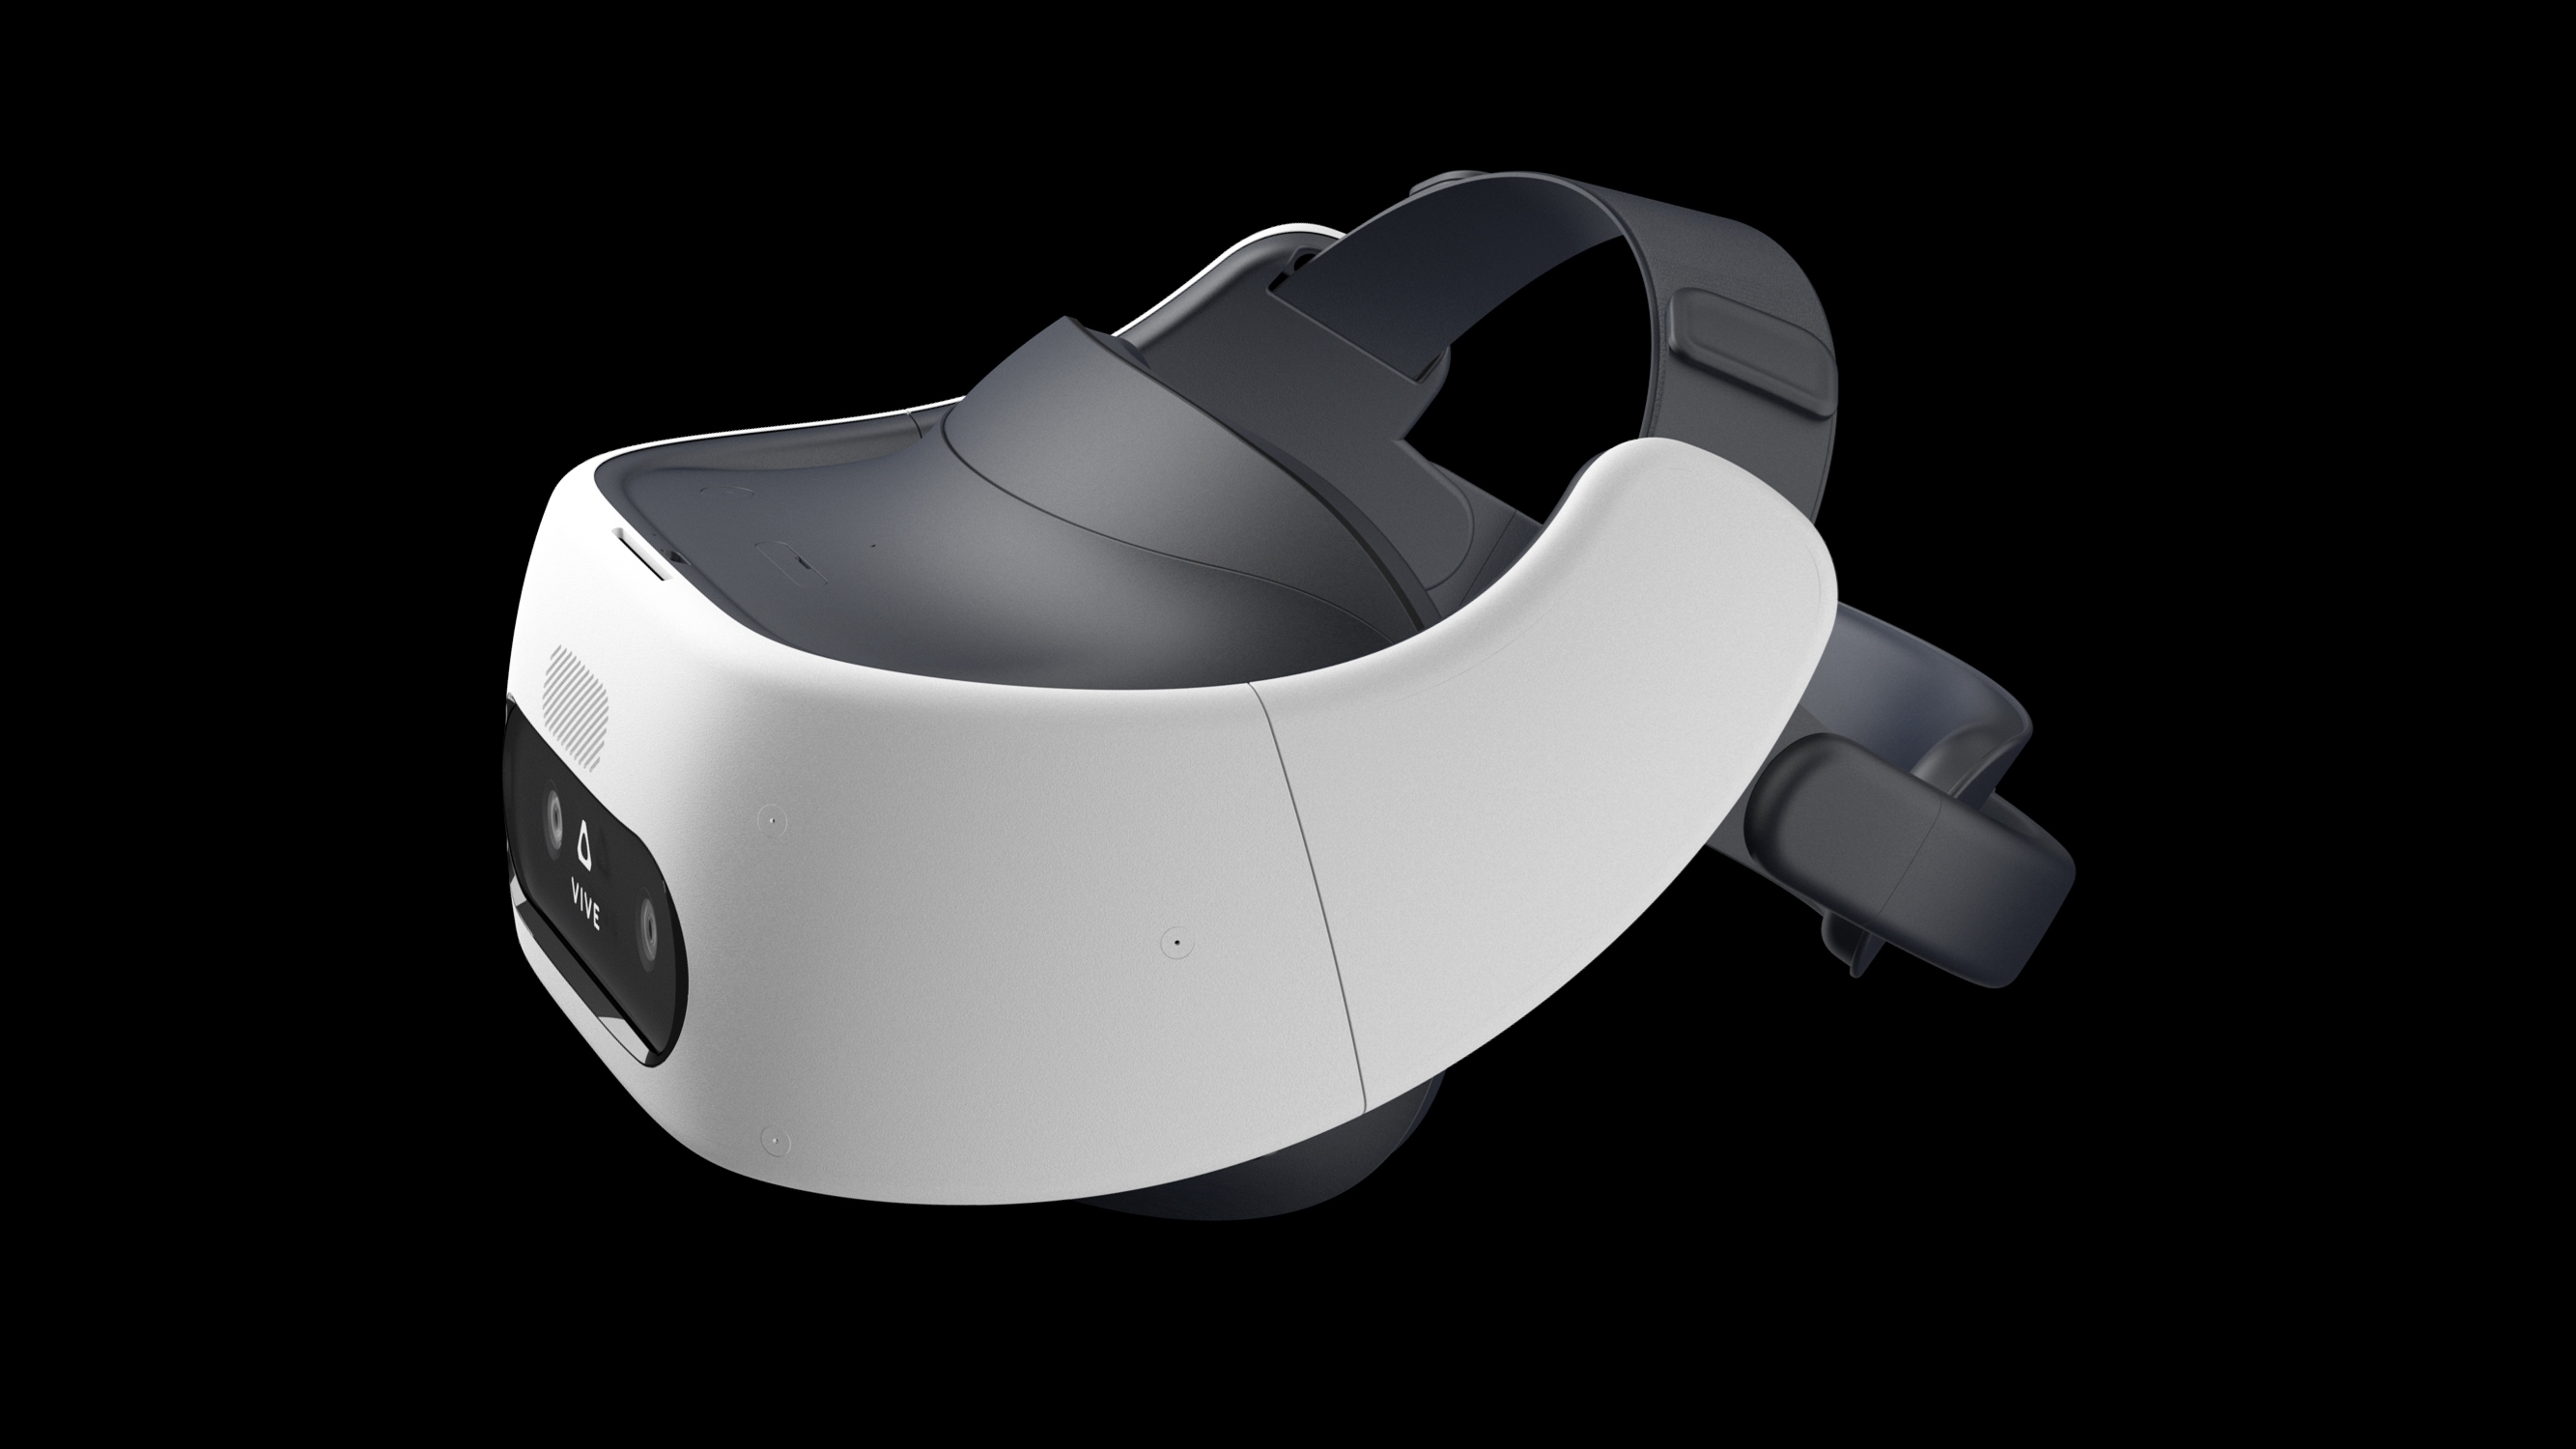 Vive Focus Plus VR headset dostal cenu a dátum | Sector.sk